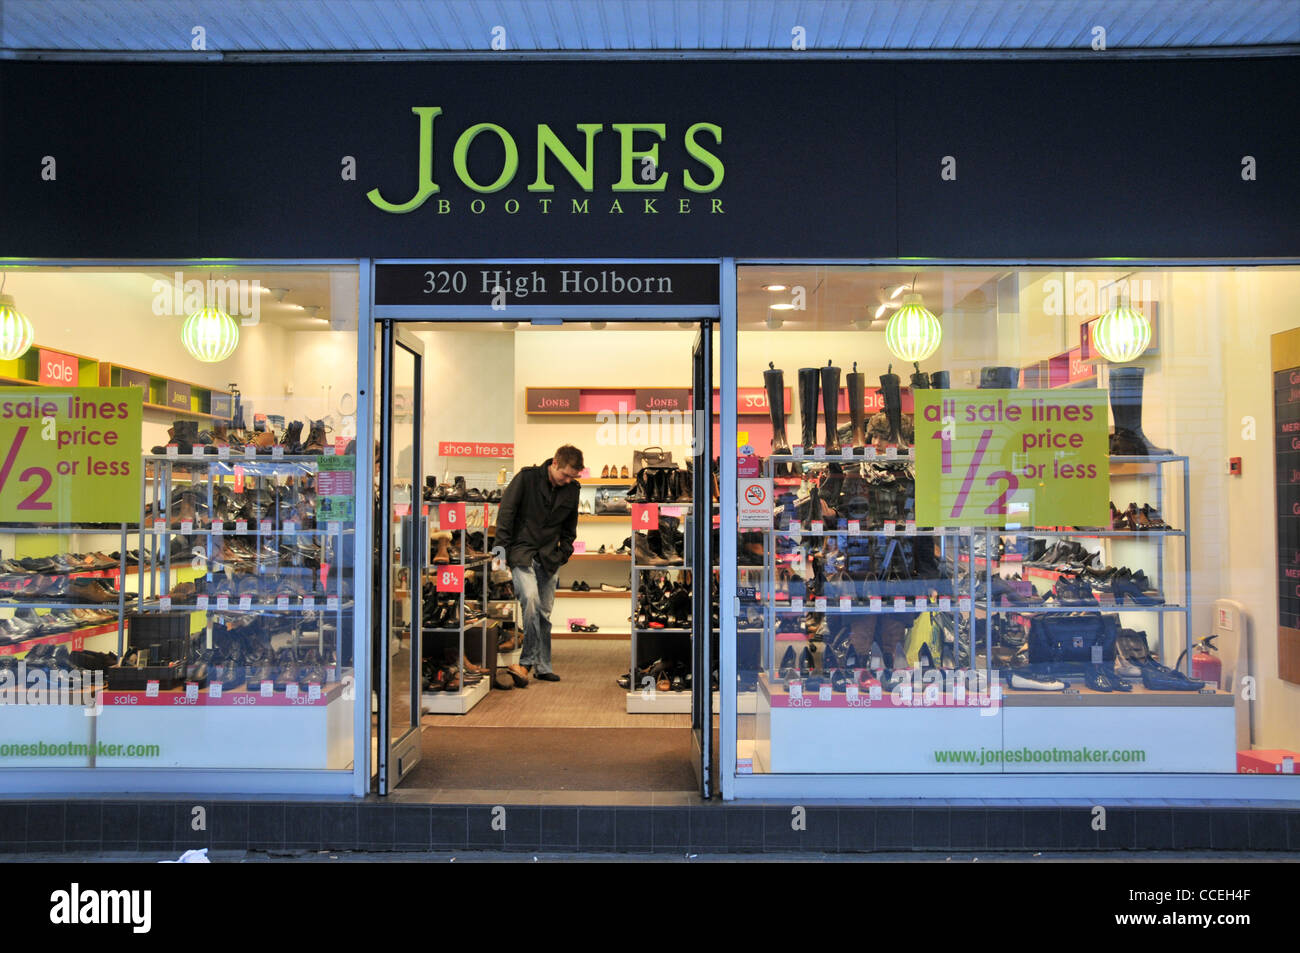 jones bootmaker closing down sale